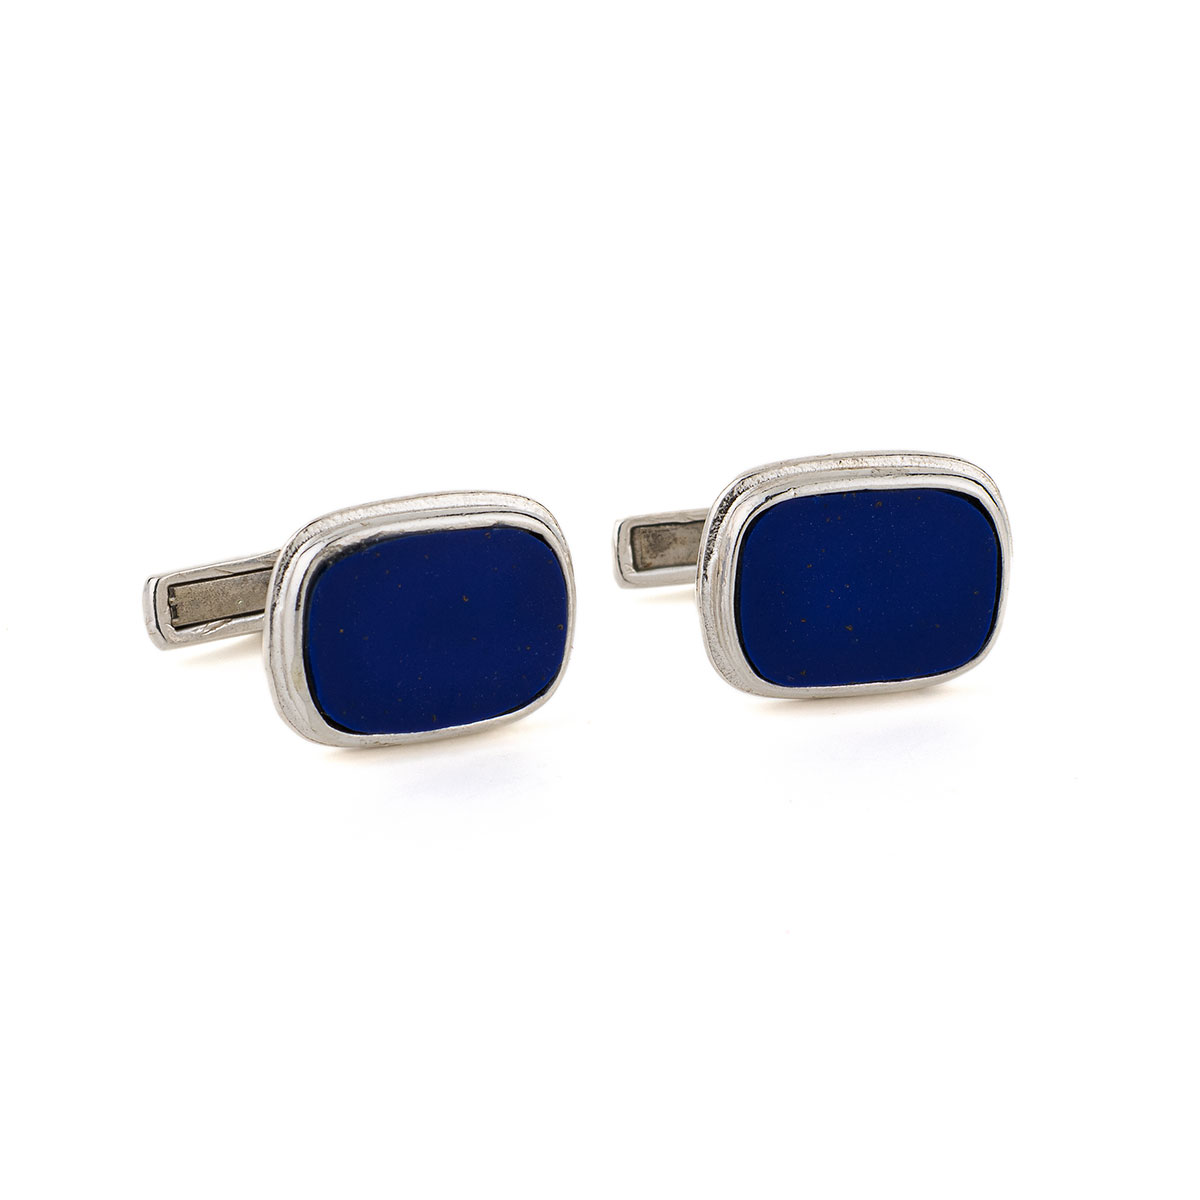 Blue Stone Cufflinks – 925 Sterling Silver